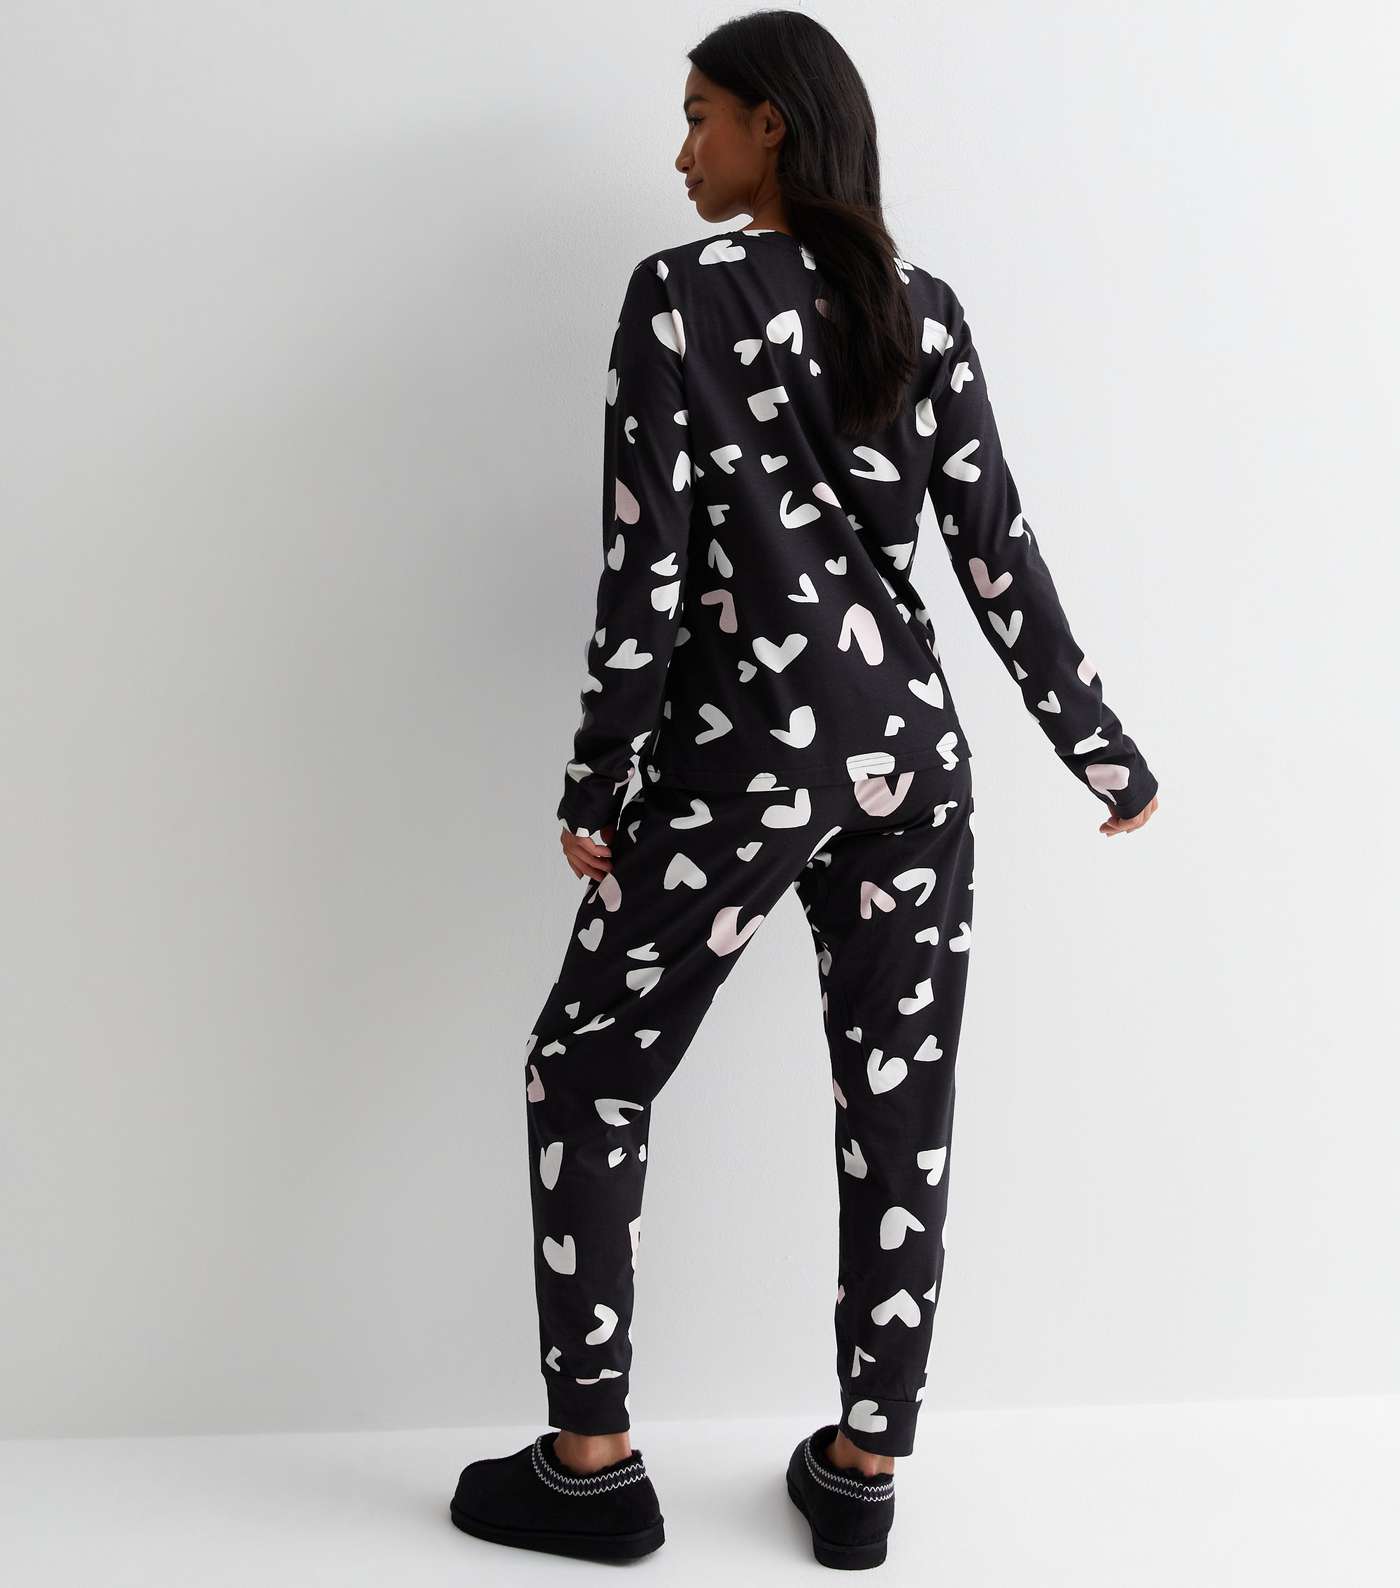 Petite Black Jogger Pyjama Set with Heart Print Image 5